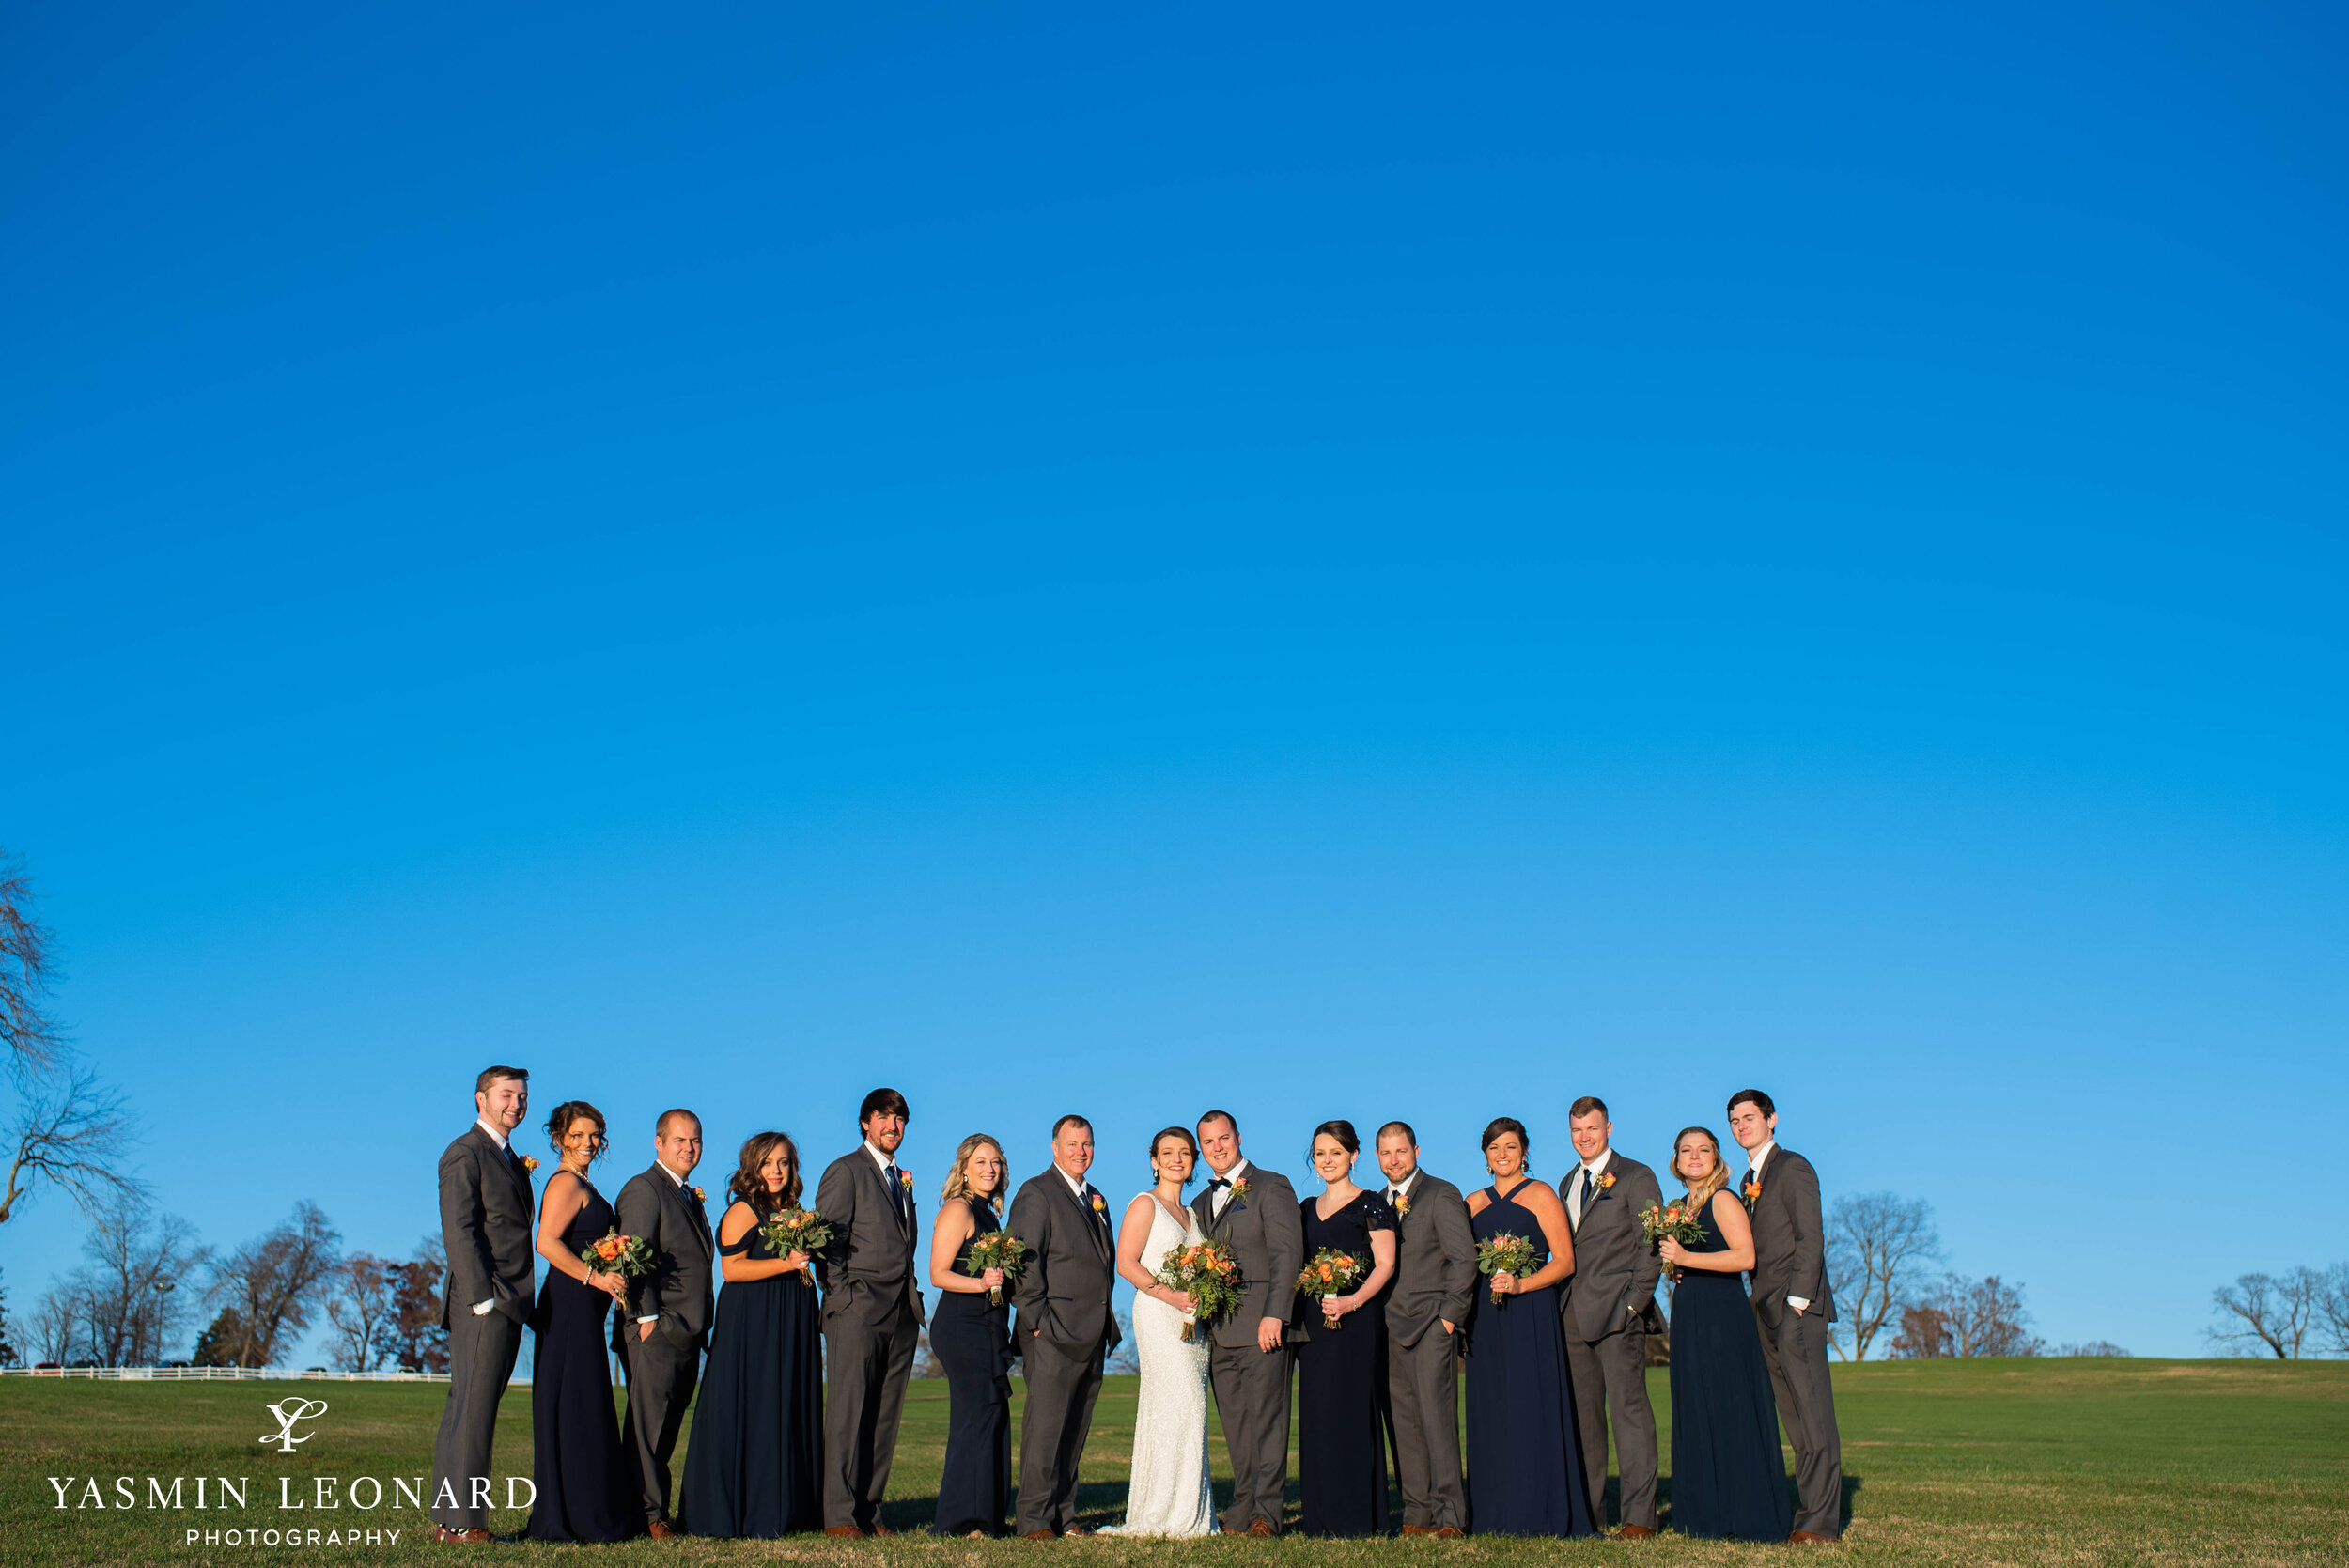 Jared and Katy - Adaumont Farms - High Point Weddings - NC Barn Weddings - Yasmin Leonard Photography-32.jpg